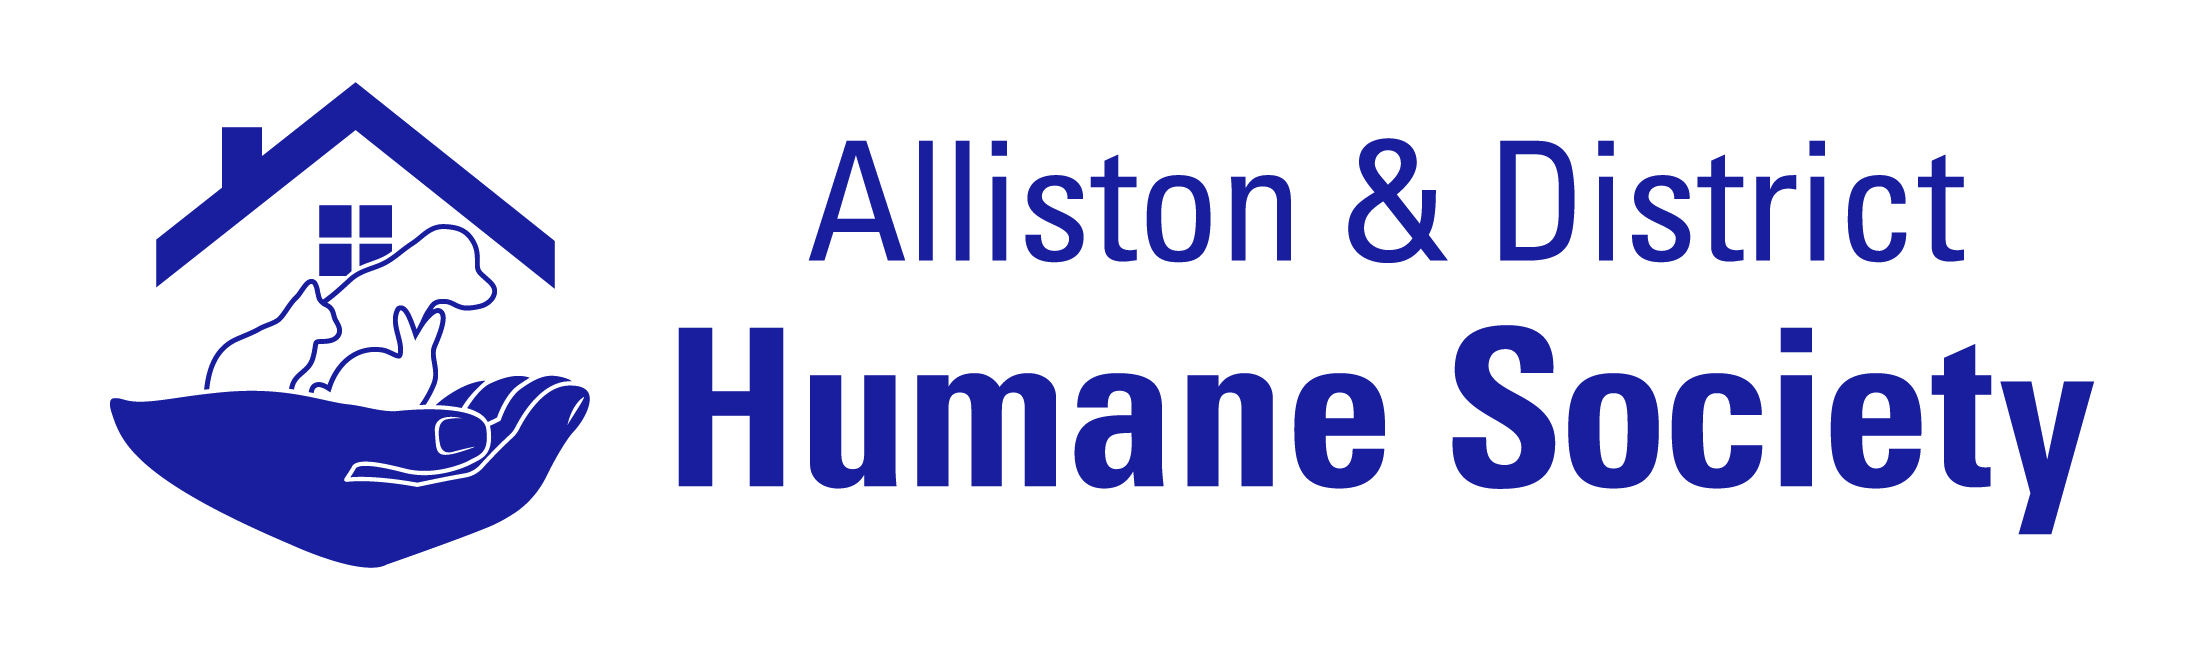 Alliston & District Humane Society